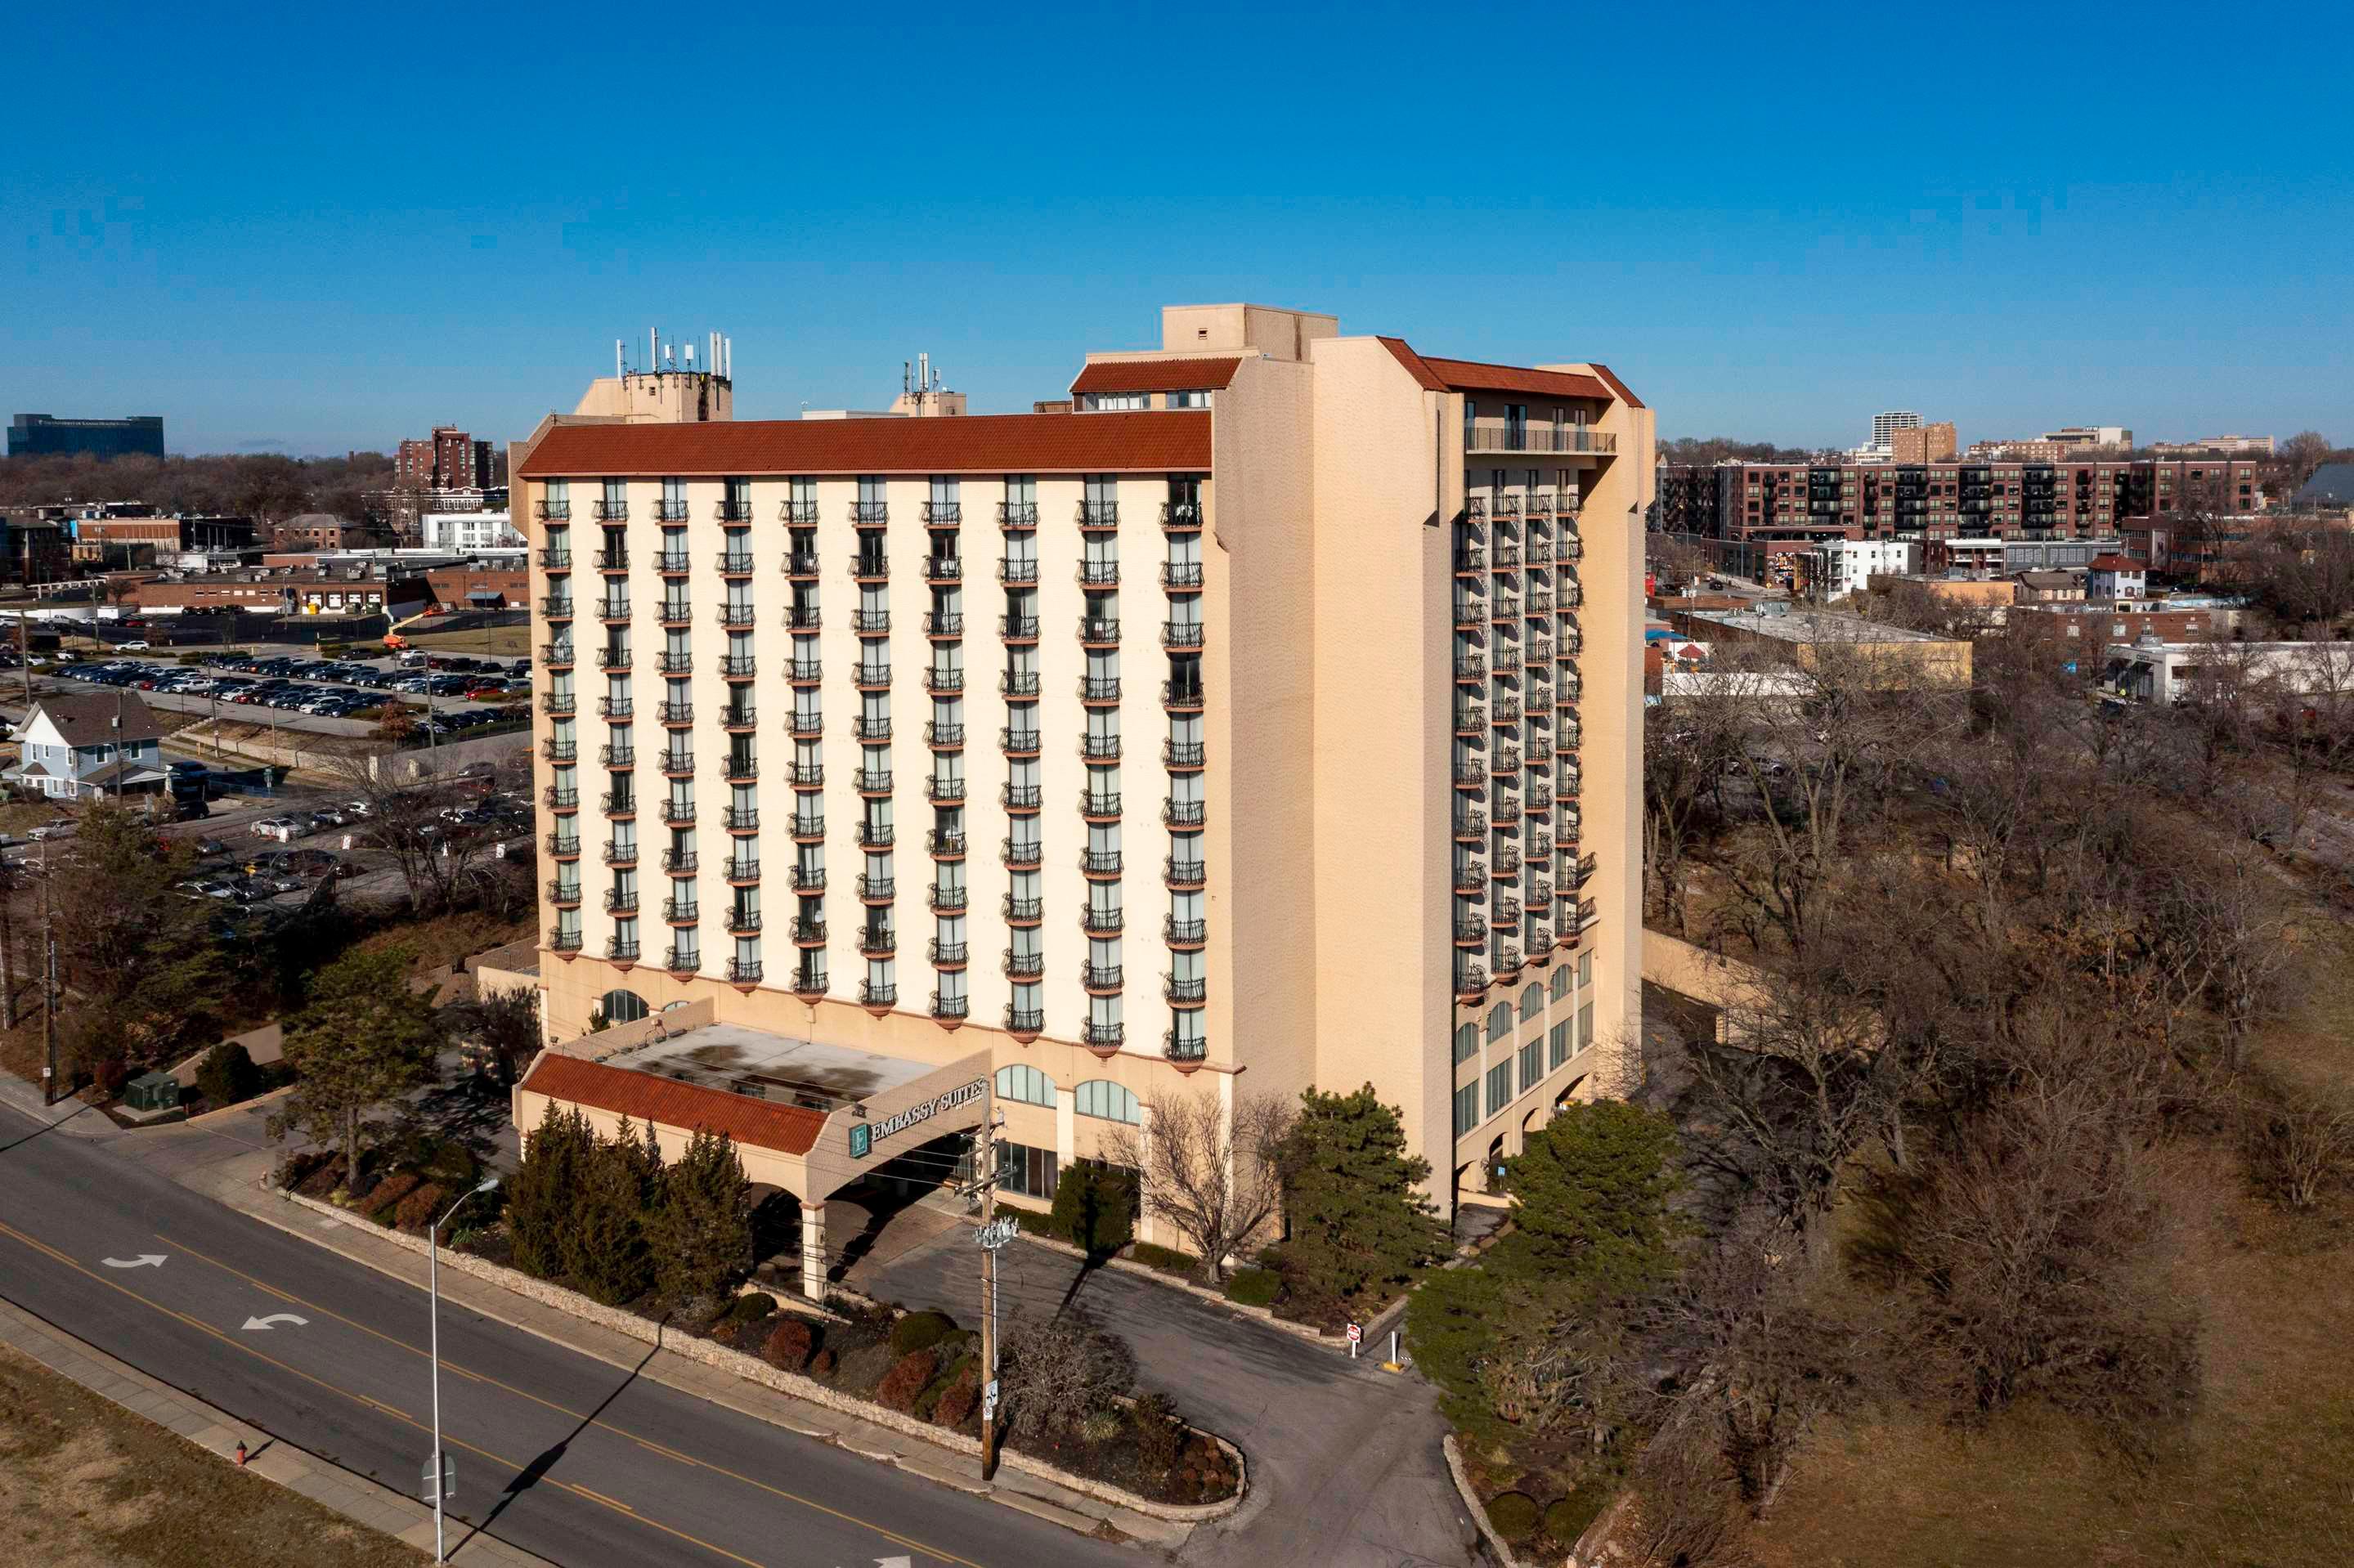 Pool - Picture of Embassy Suites by Hilton Kansas City Plaza - Tripadvisor